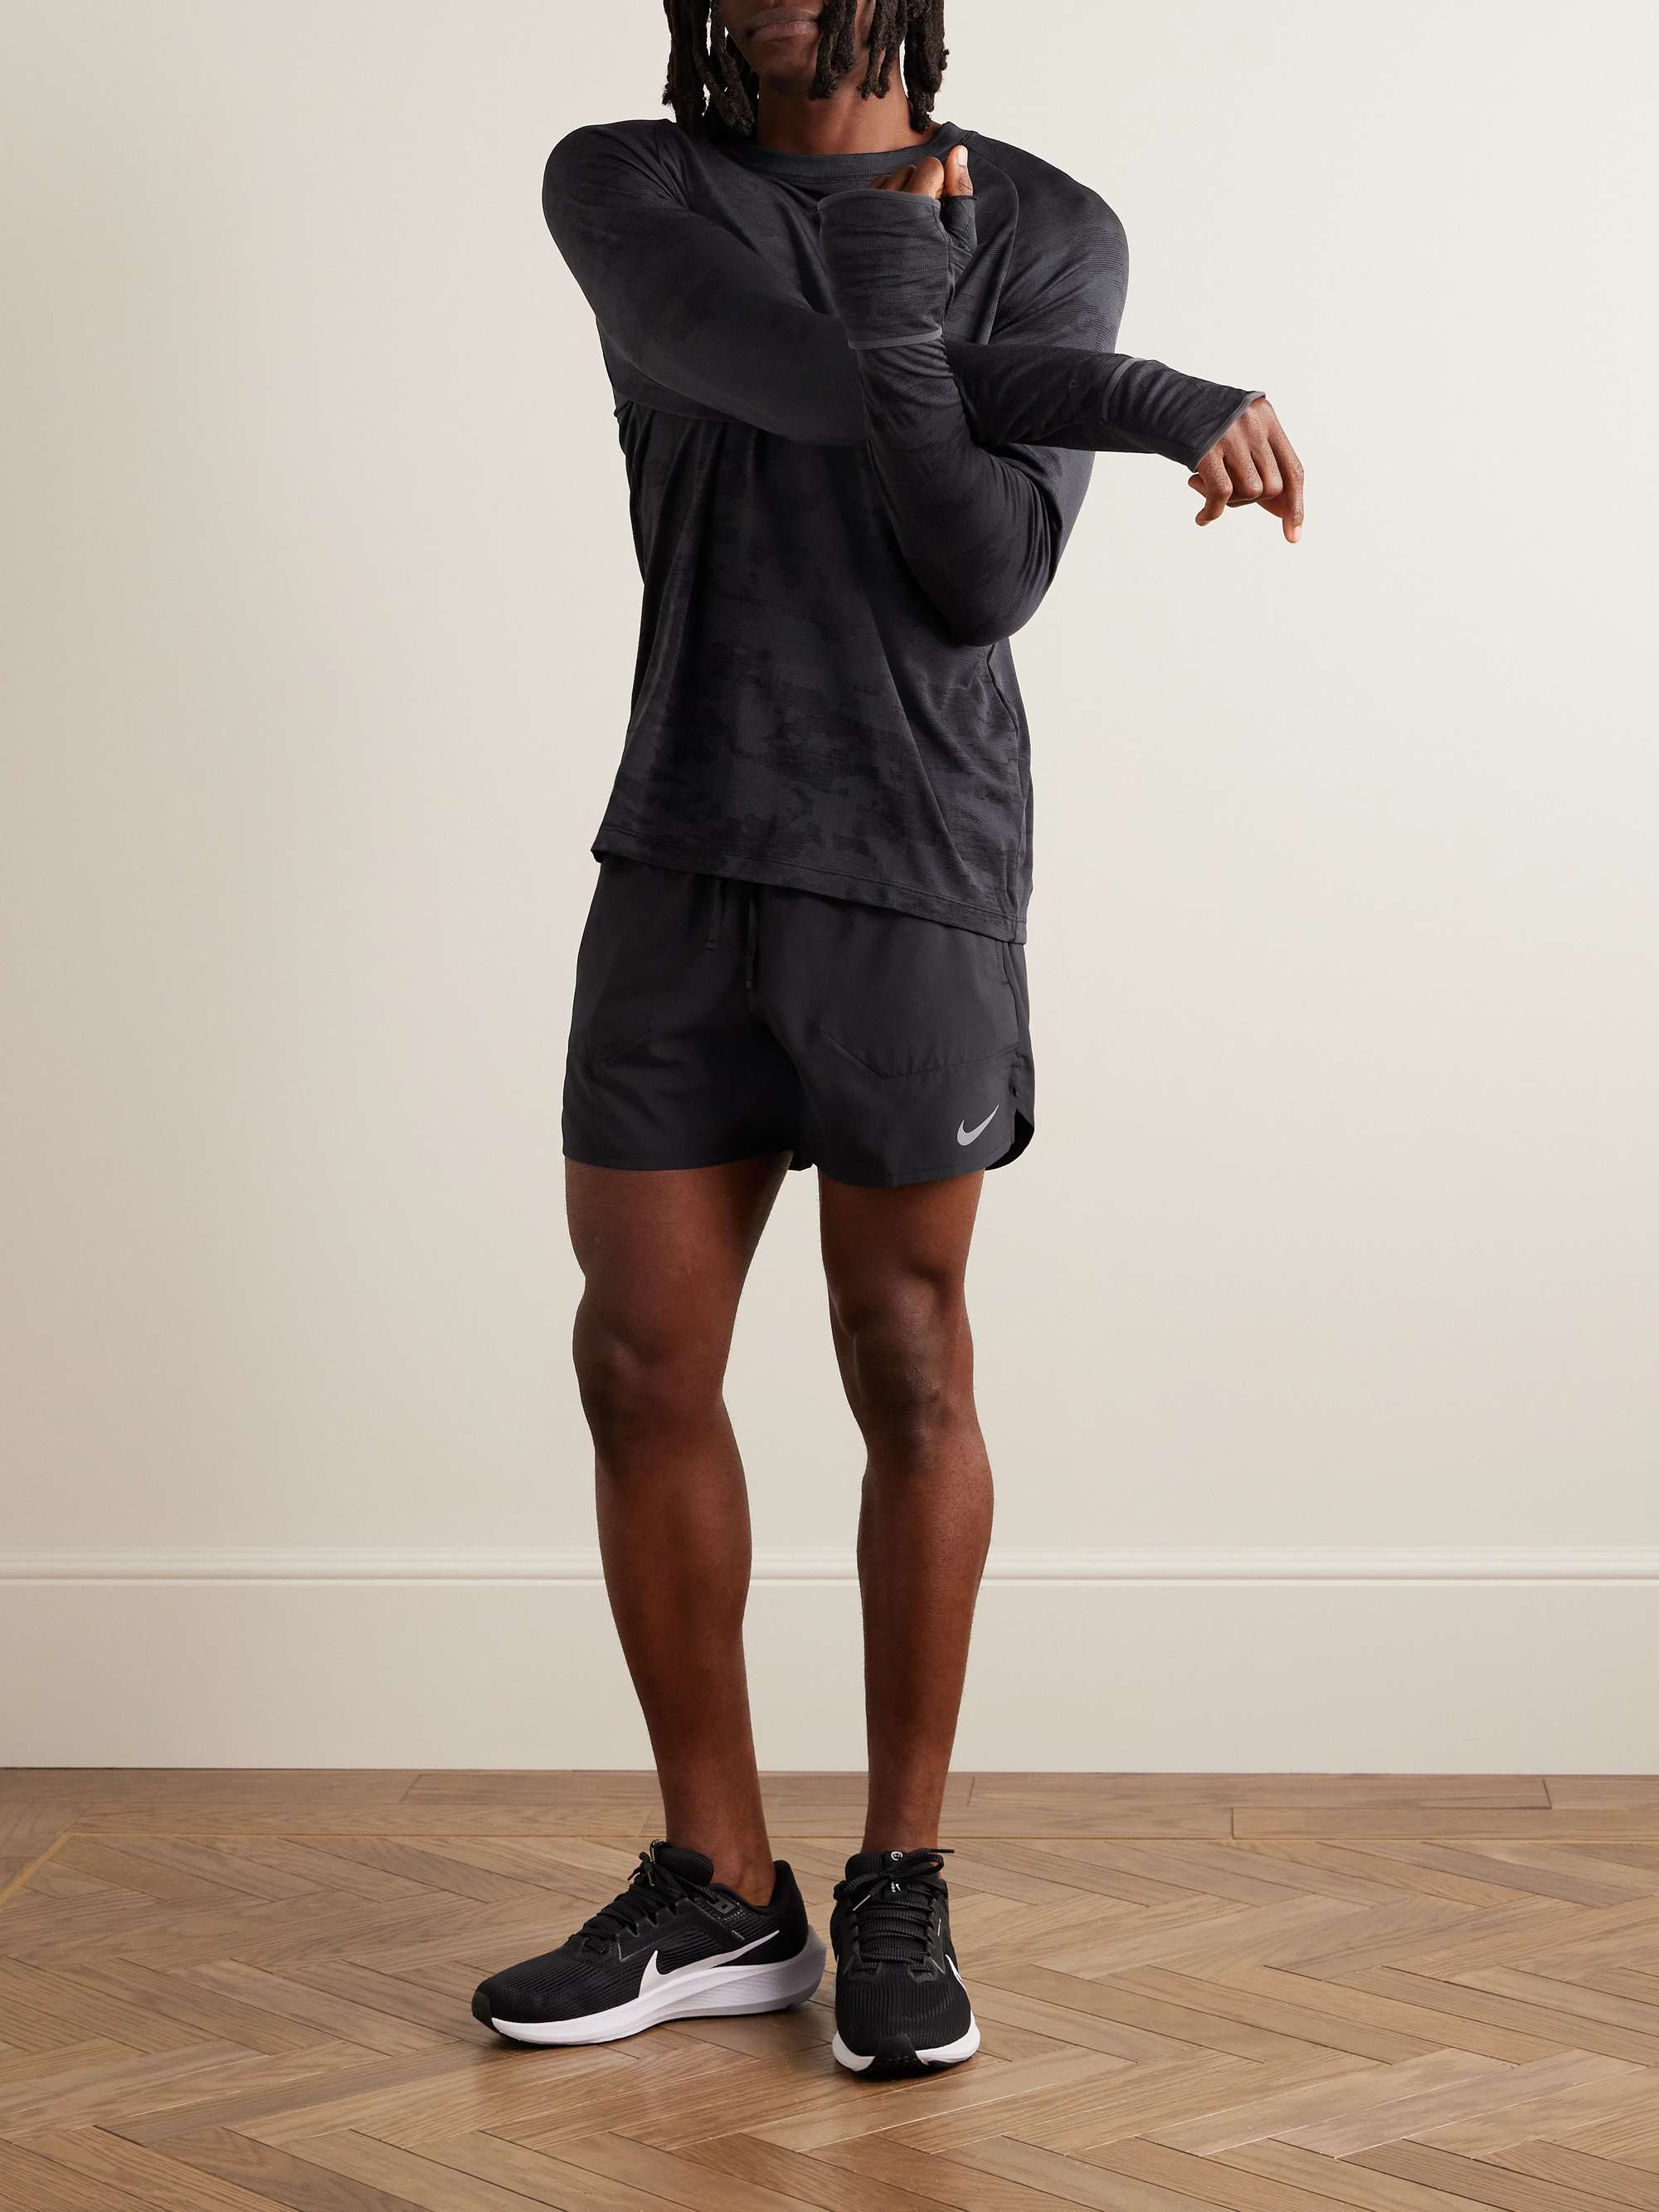 Nike Run Cooling Calf Sleeves